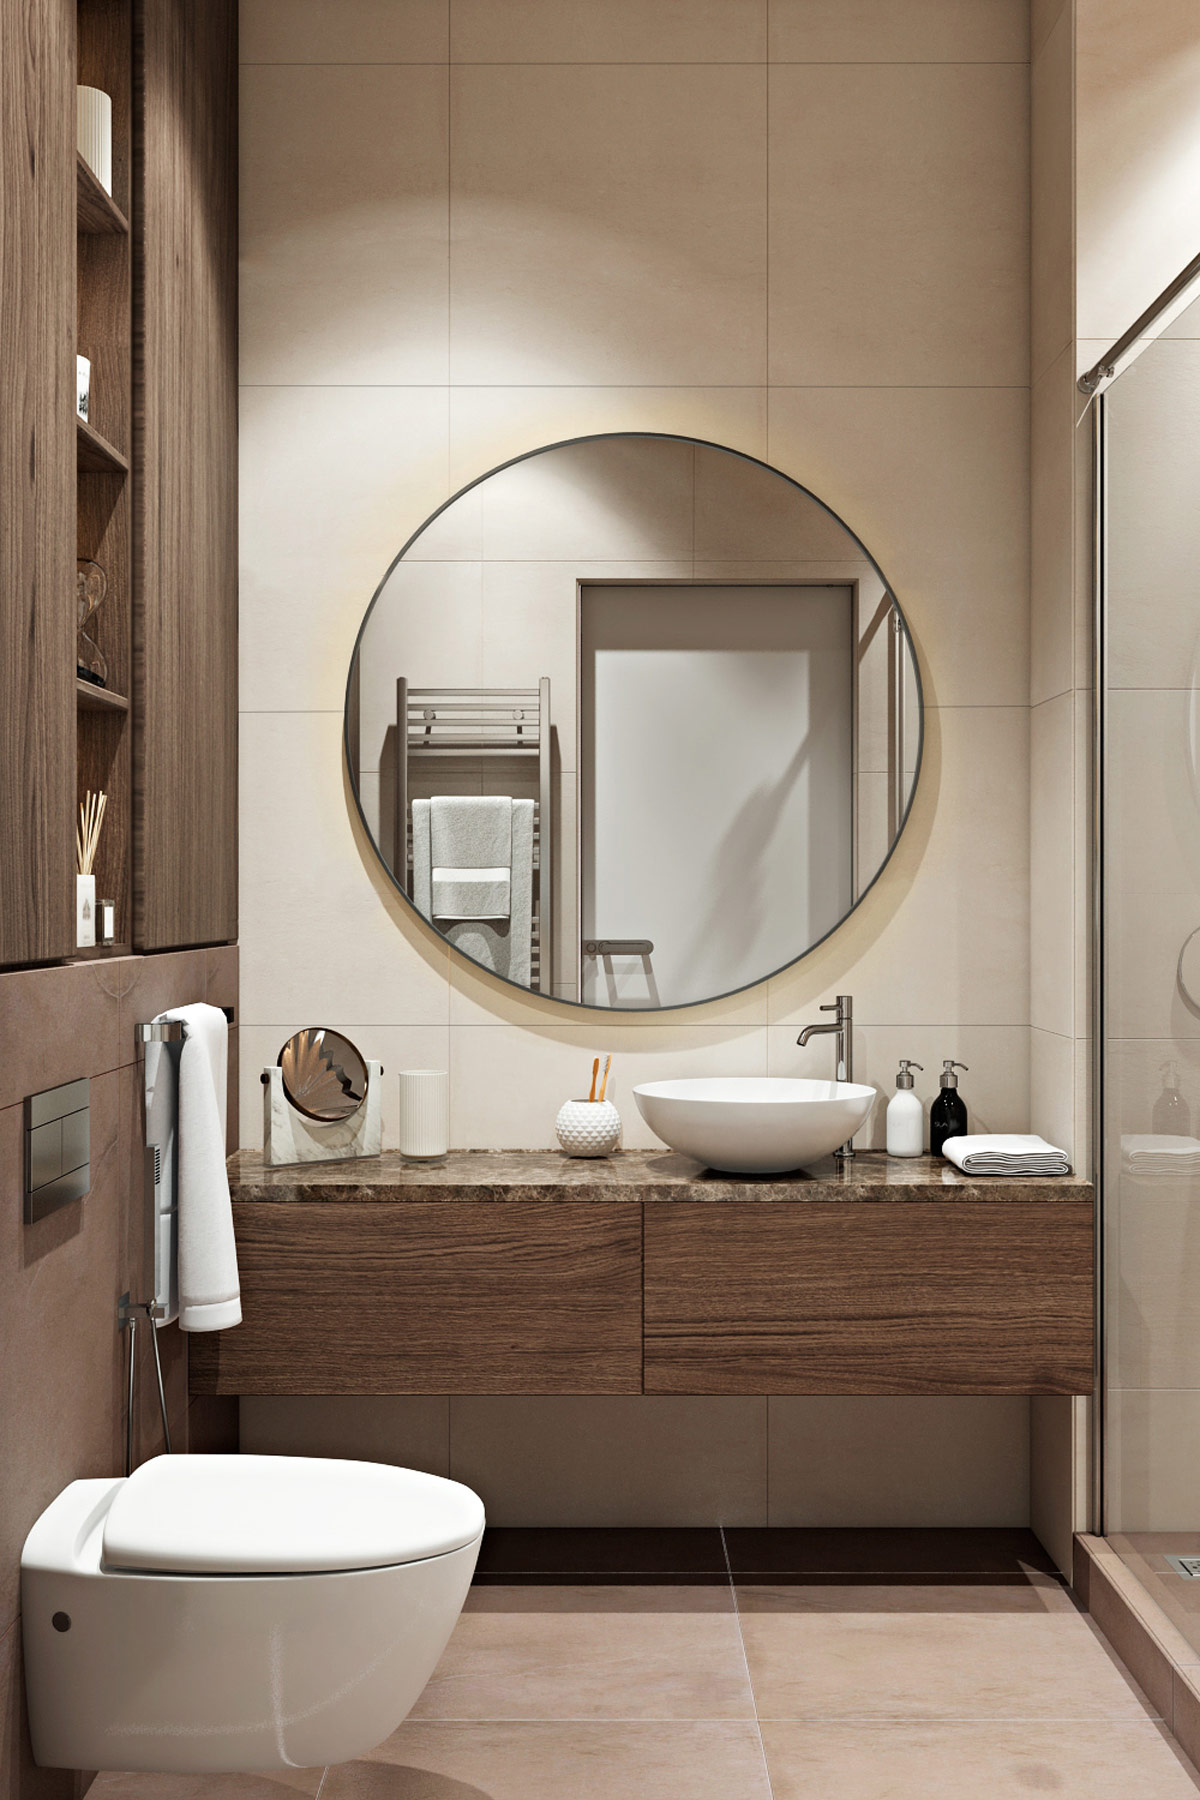 Round Bathroom Mirror Above Stone And, Bathroom Vanities With Round Mirrors